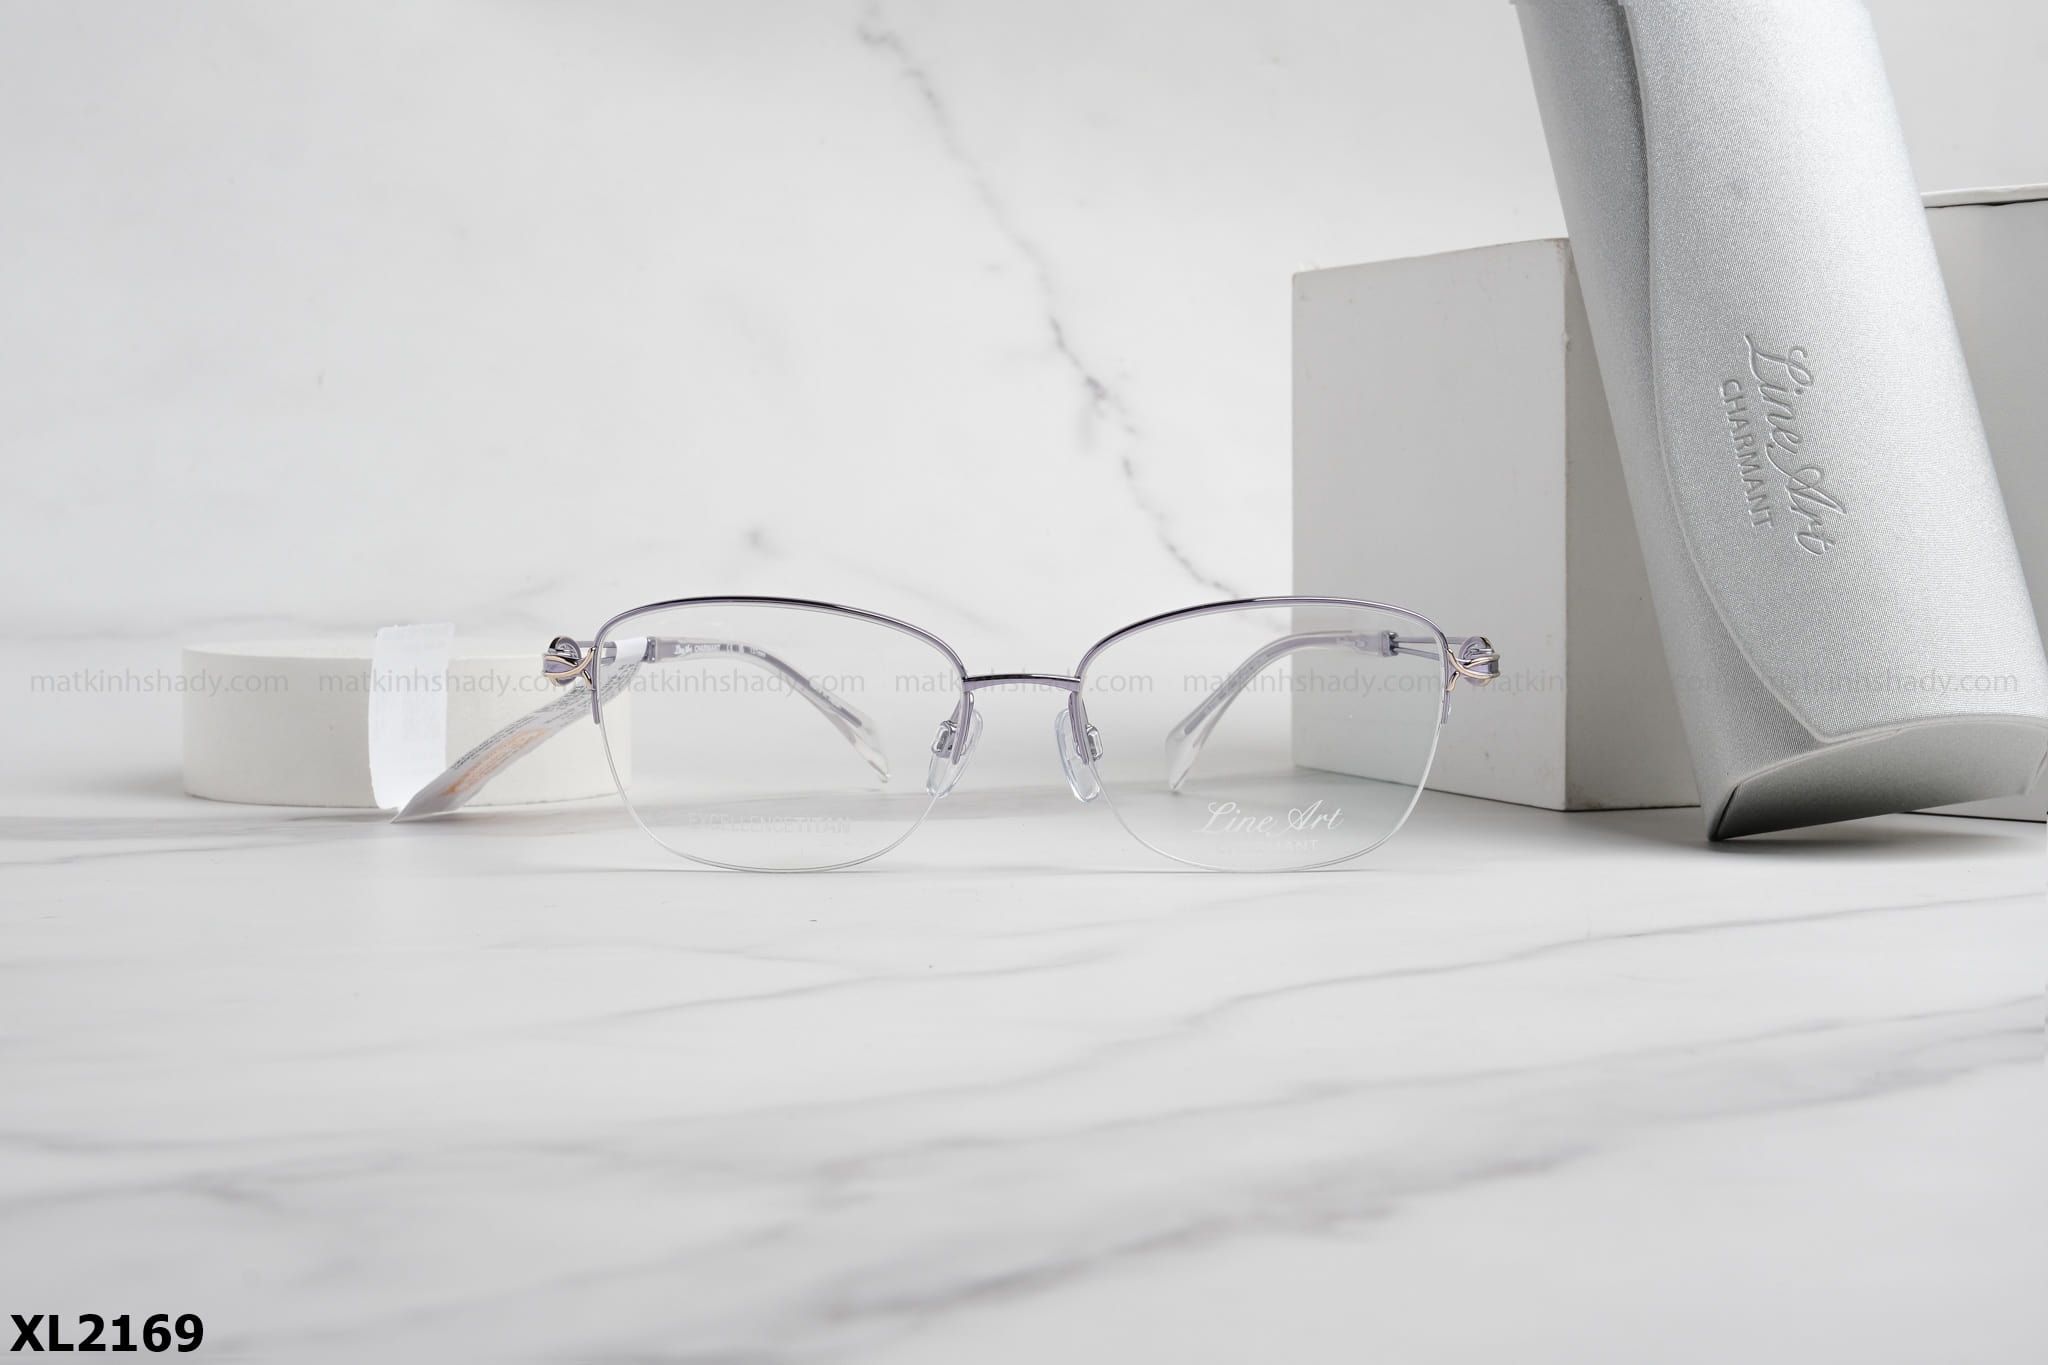  LINE ART CHARMANT Eyewear - Glasses - XL2169 